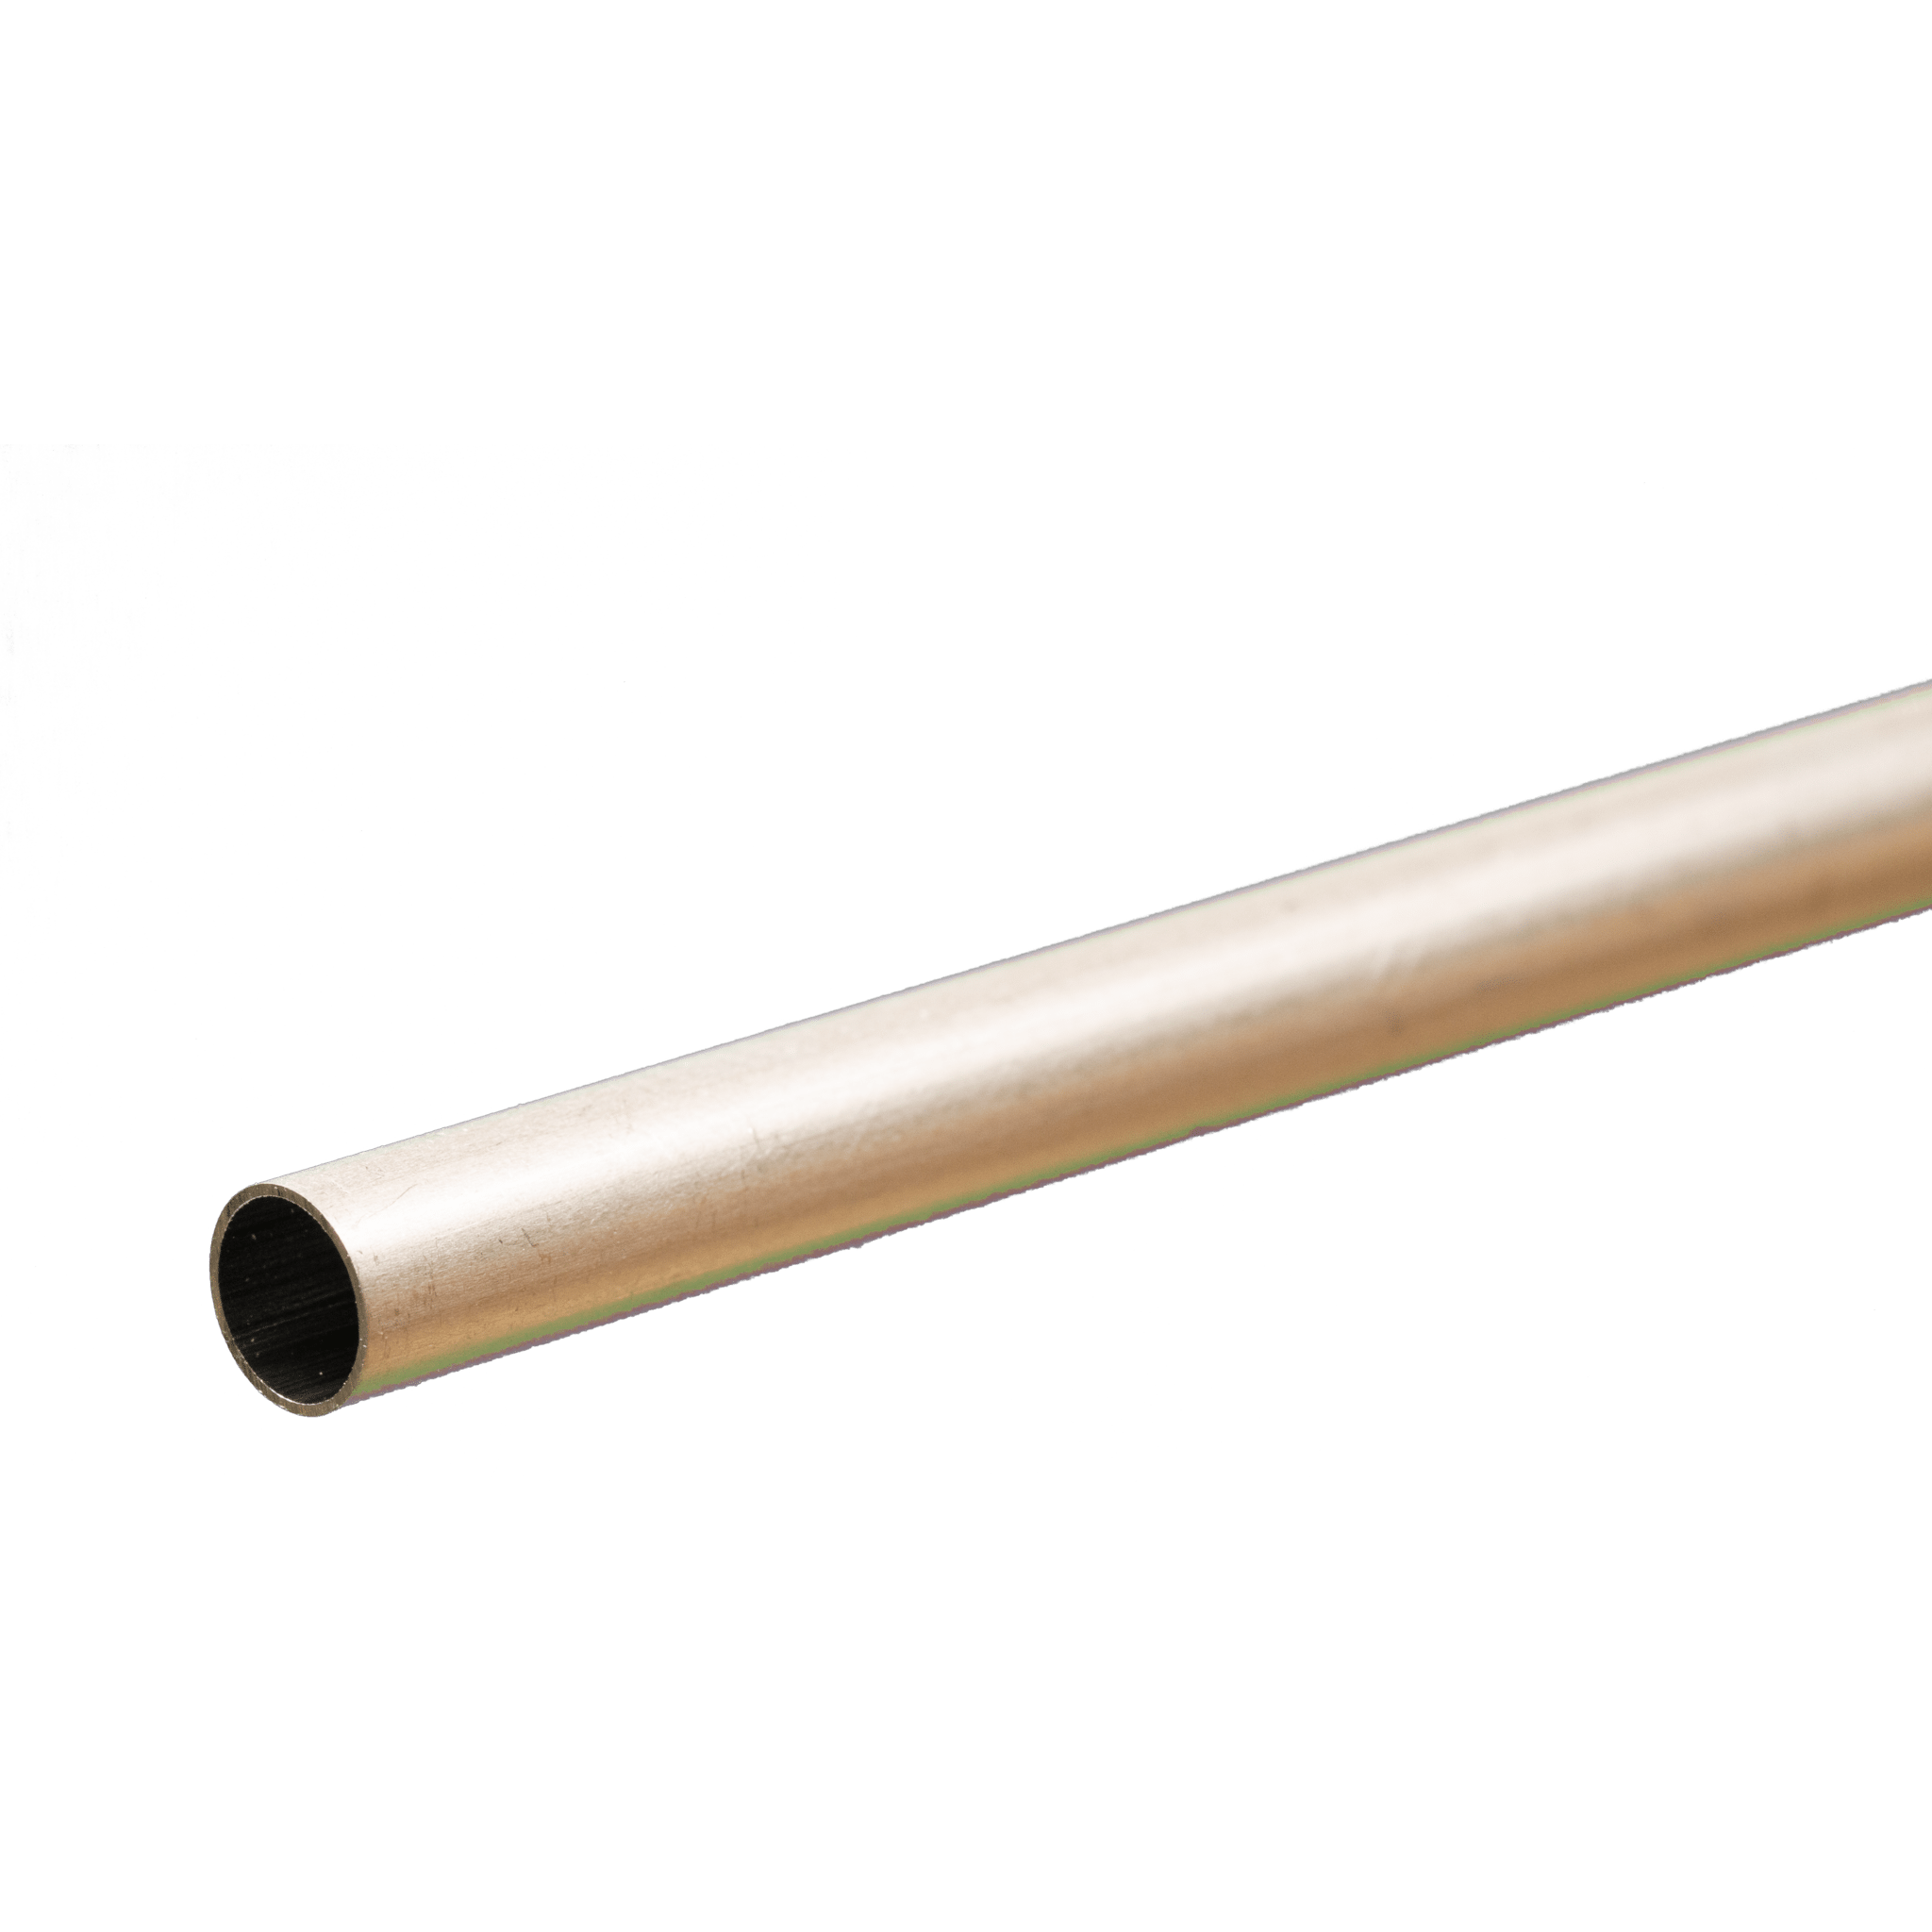 K&S Metals 8106 Round Aluminum Tube 1/4" OD x 0.014" Wall x 12" Long (1 Piece)